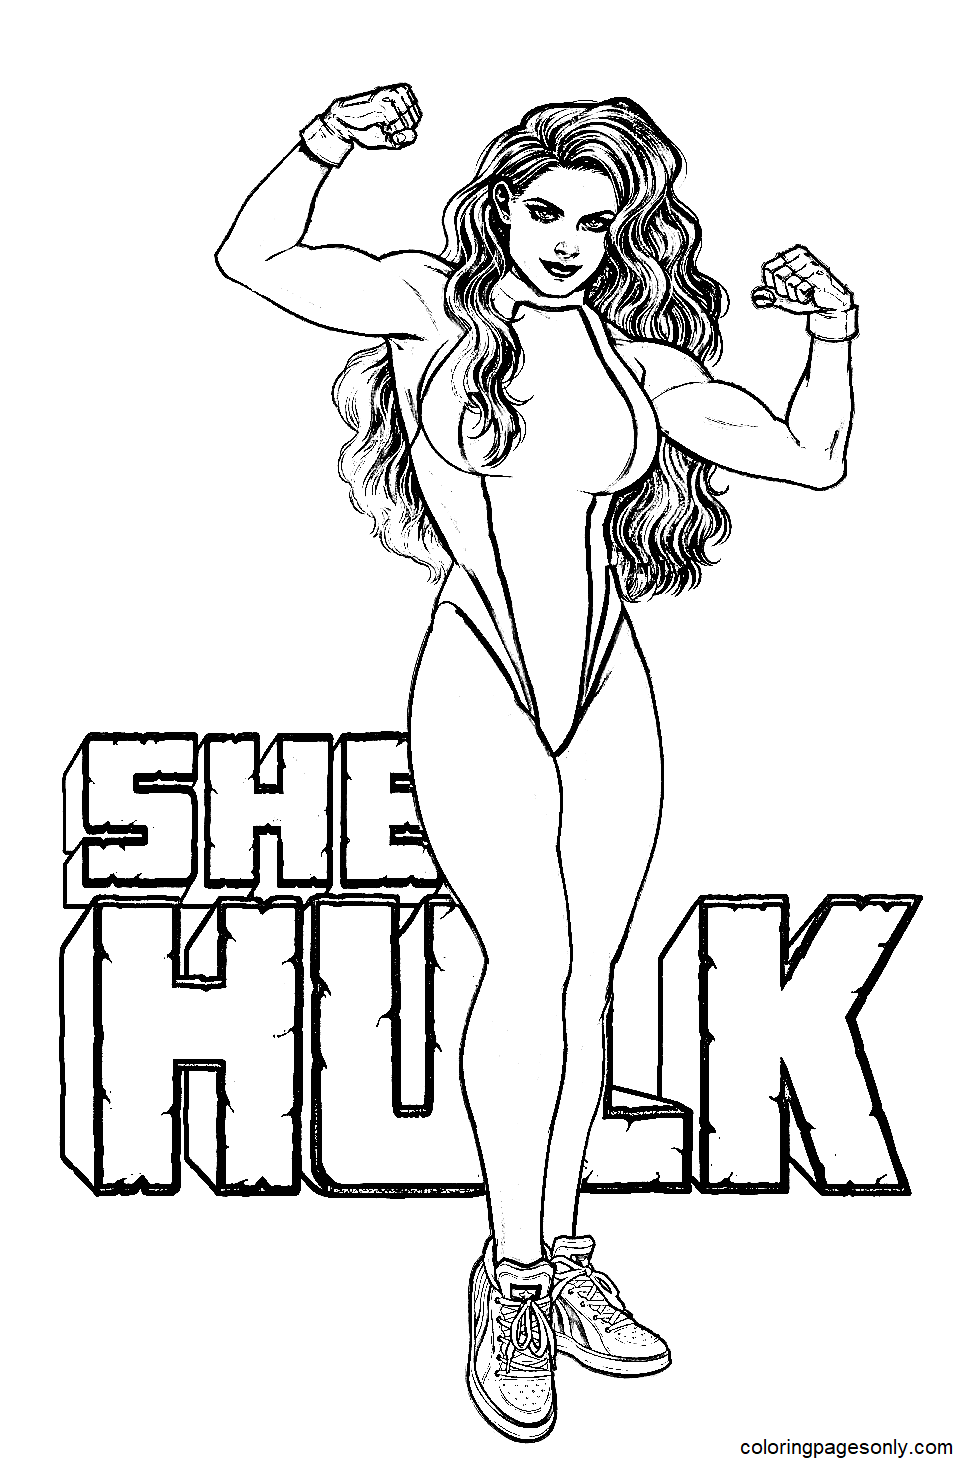 She-Hulk – Jennifer Walters van She-Hulk